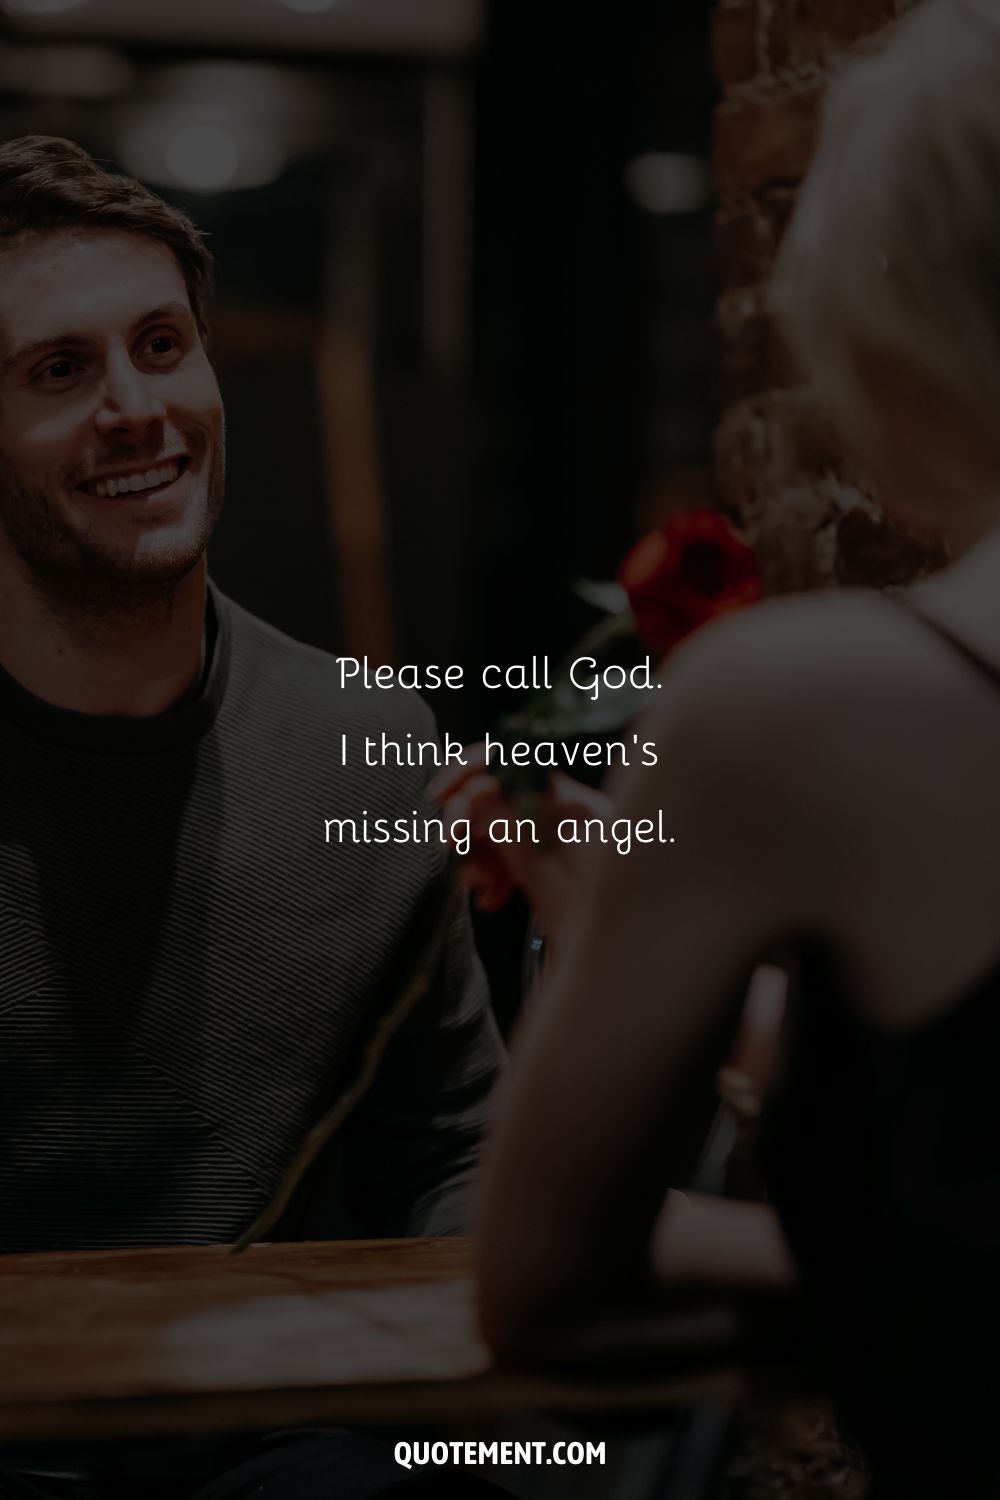 Please call God. I think heaven’s missing an angel.